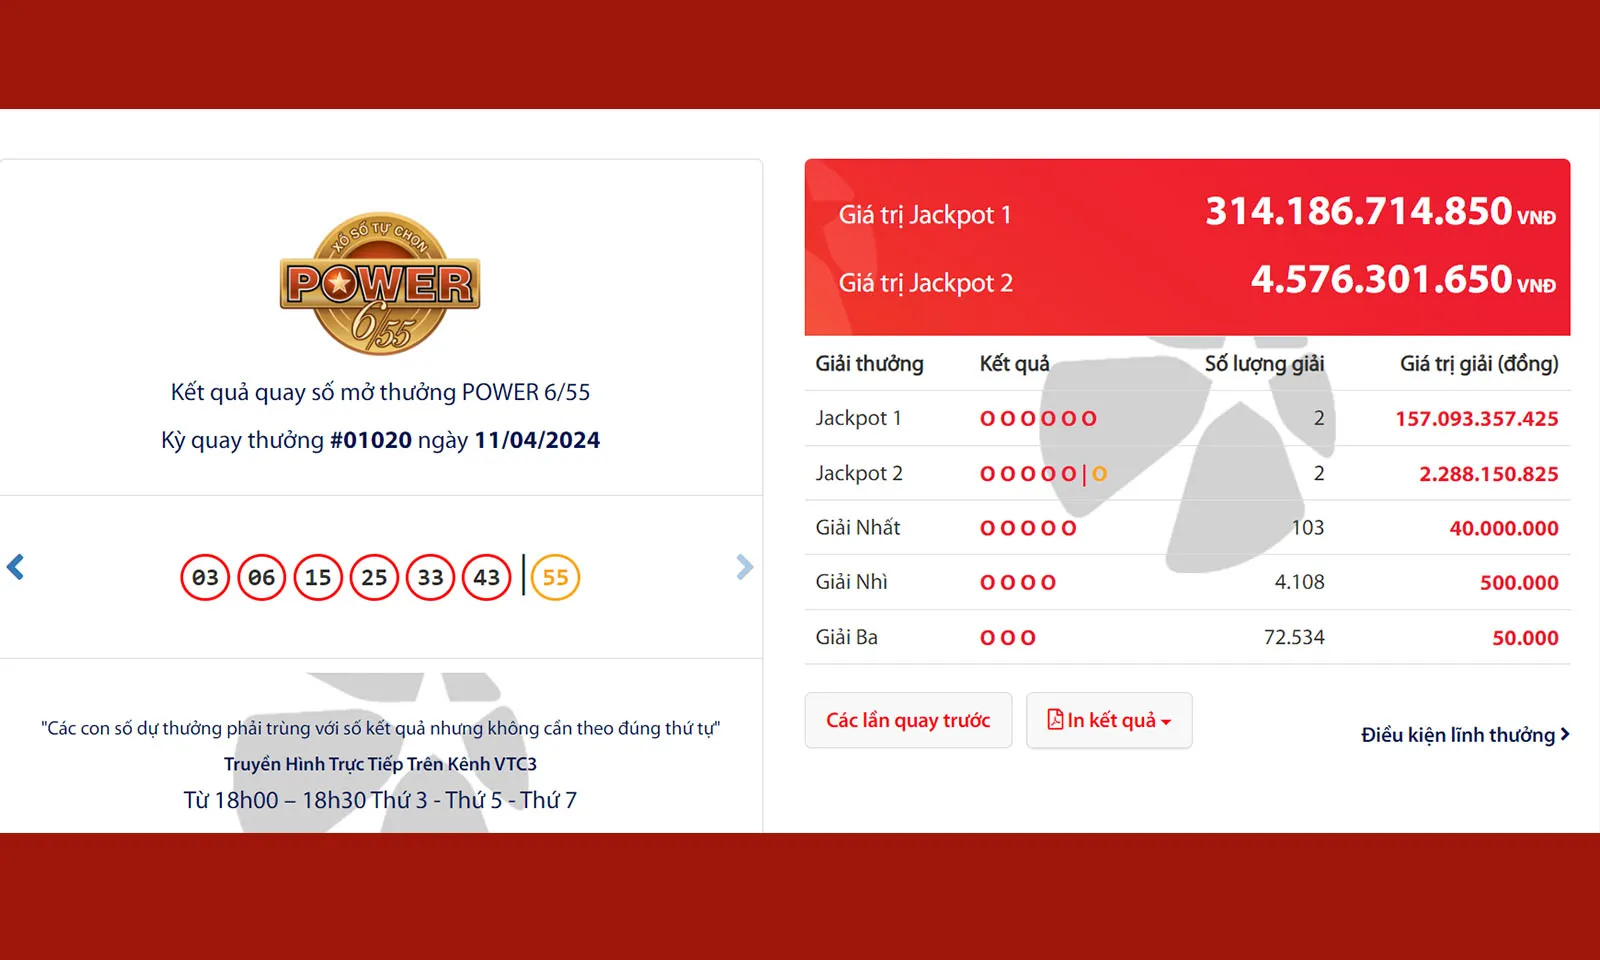 Vietlott的2张中奖彩票在胡志明市售出，价值3140亿越南盾